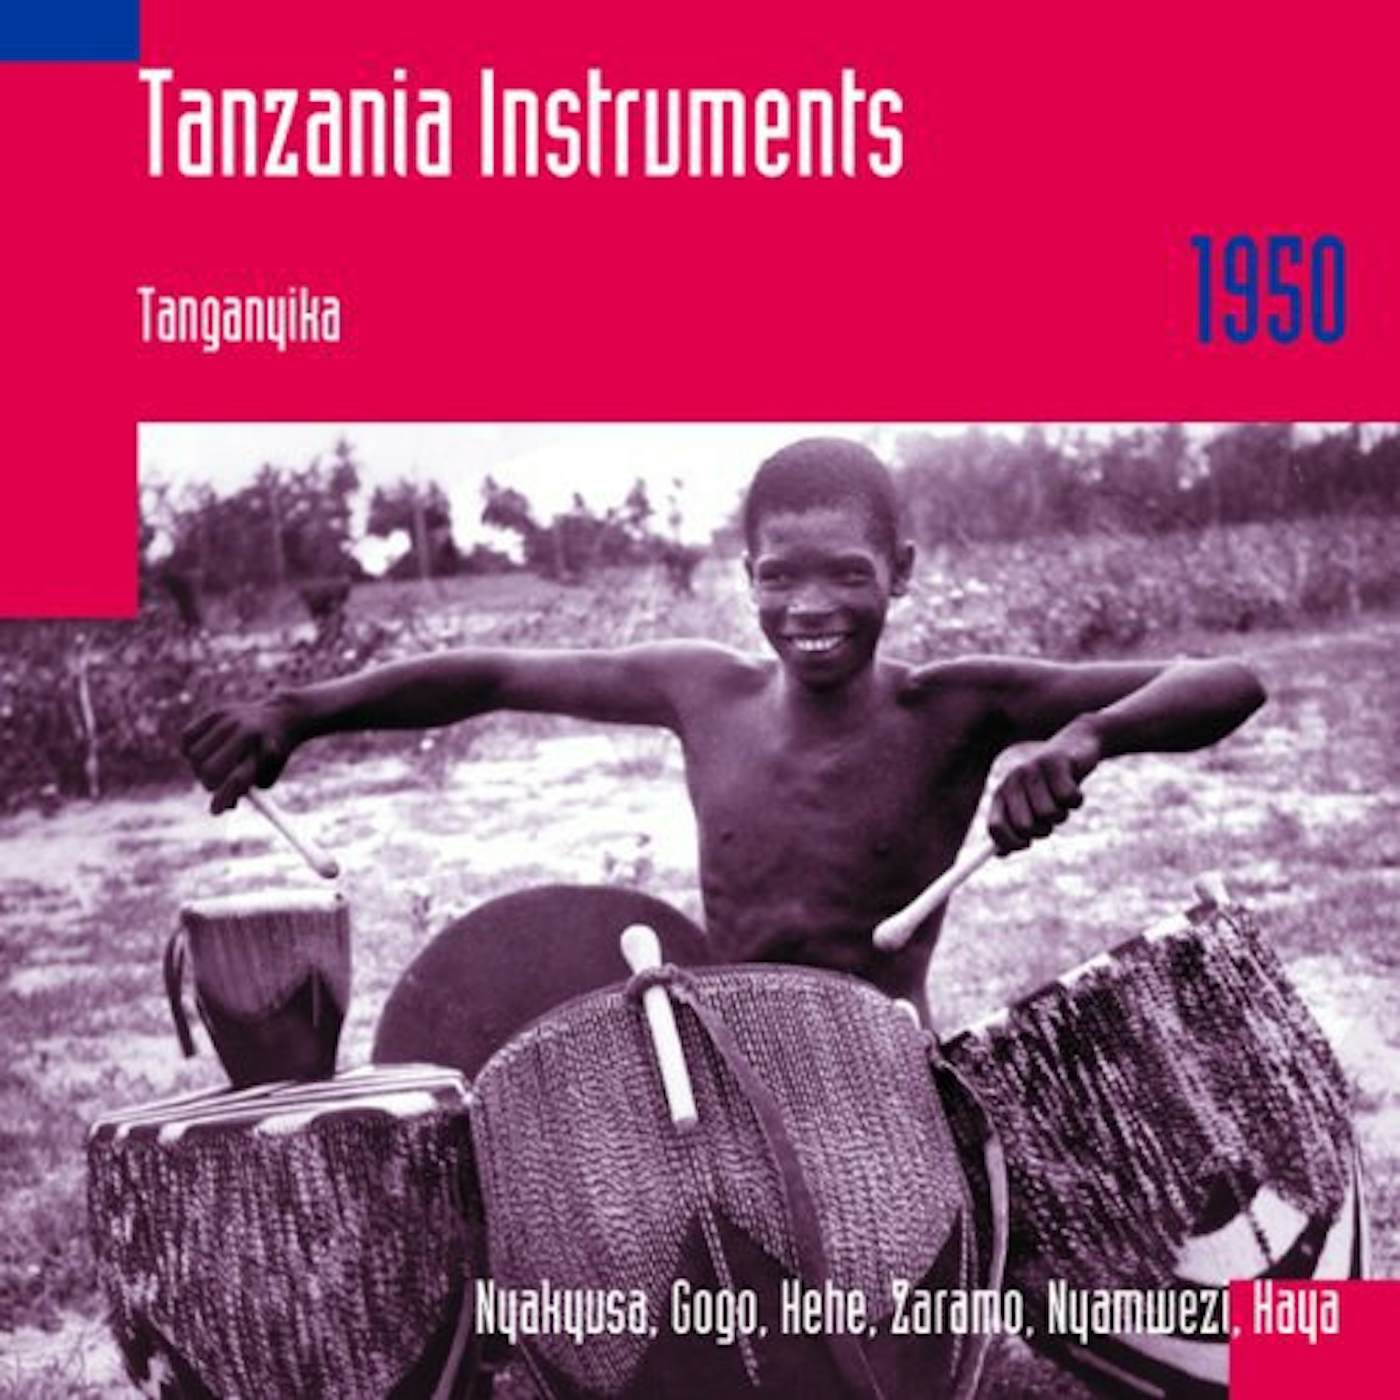 Hugh Tracey TANZANIA INSTRUMENTS: TANGANYIKA 1950 CD